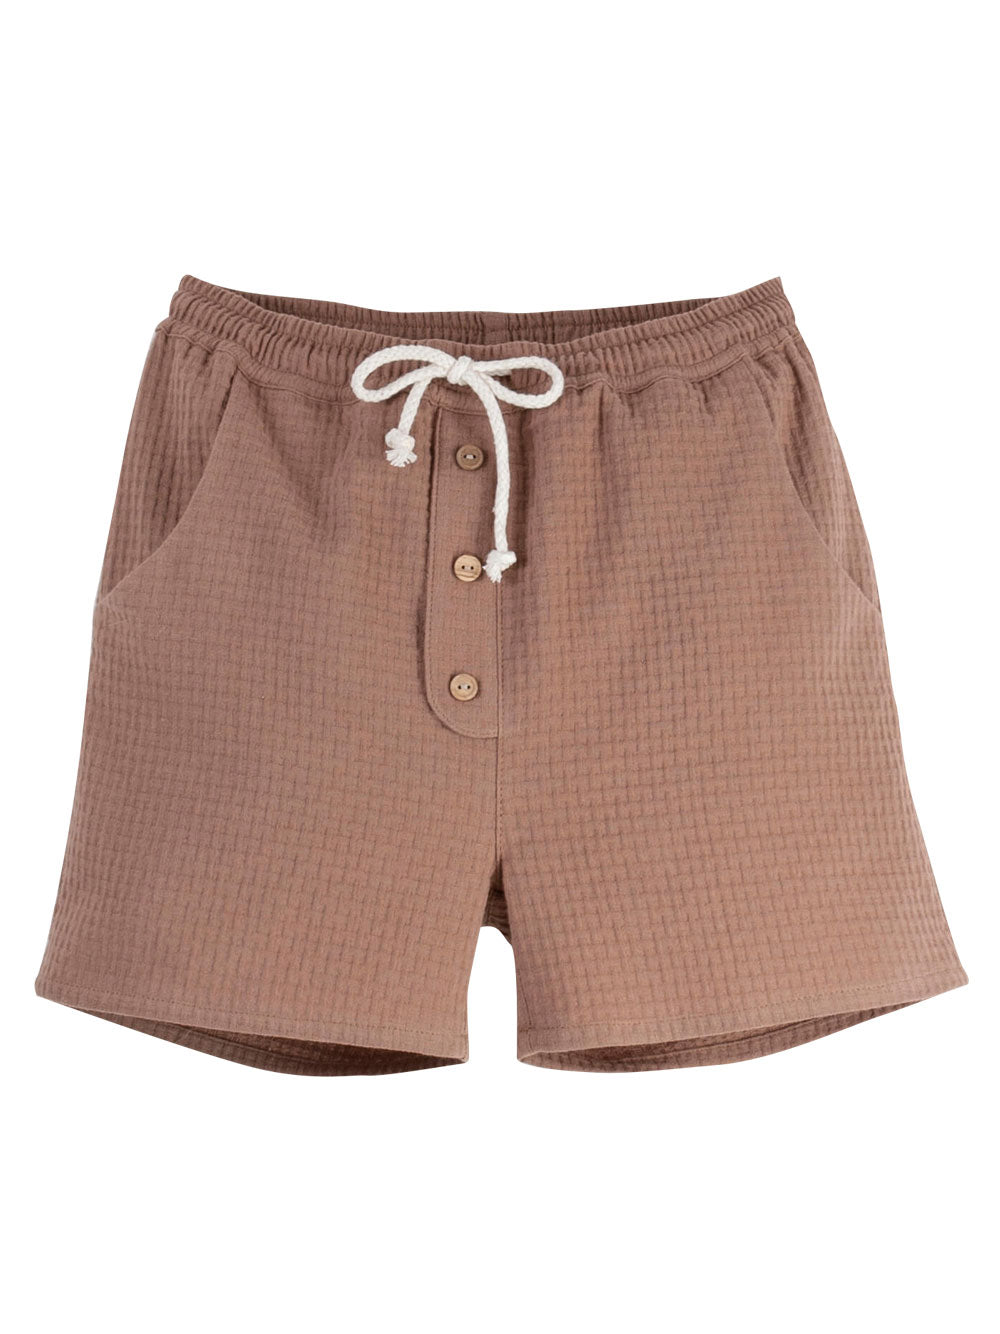 PREORDER: Brown Textured Bermuda Shorts